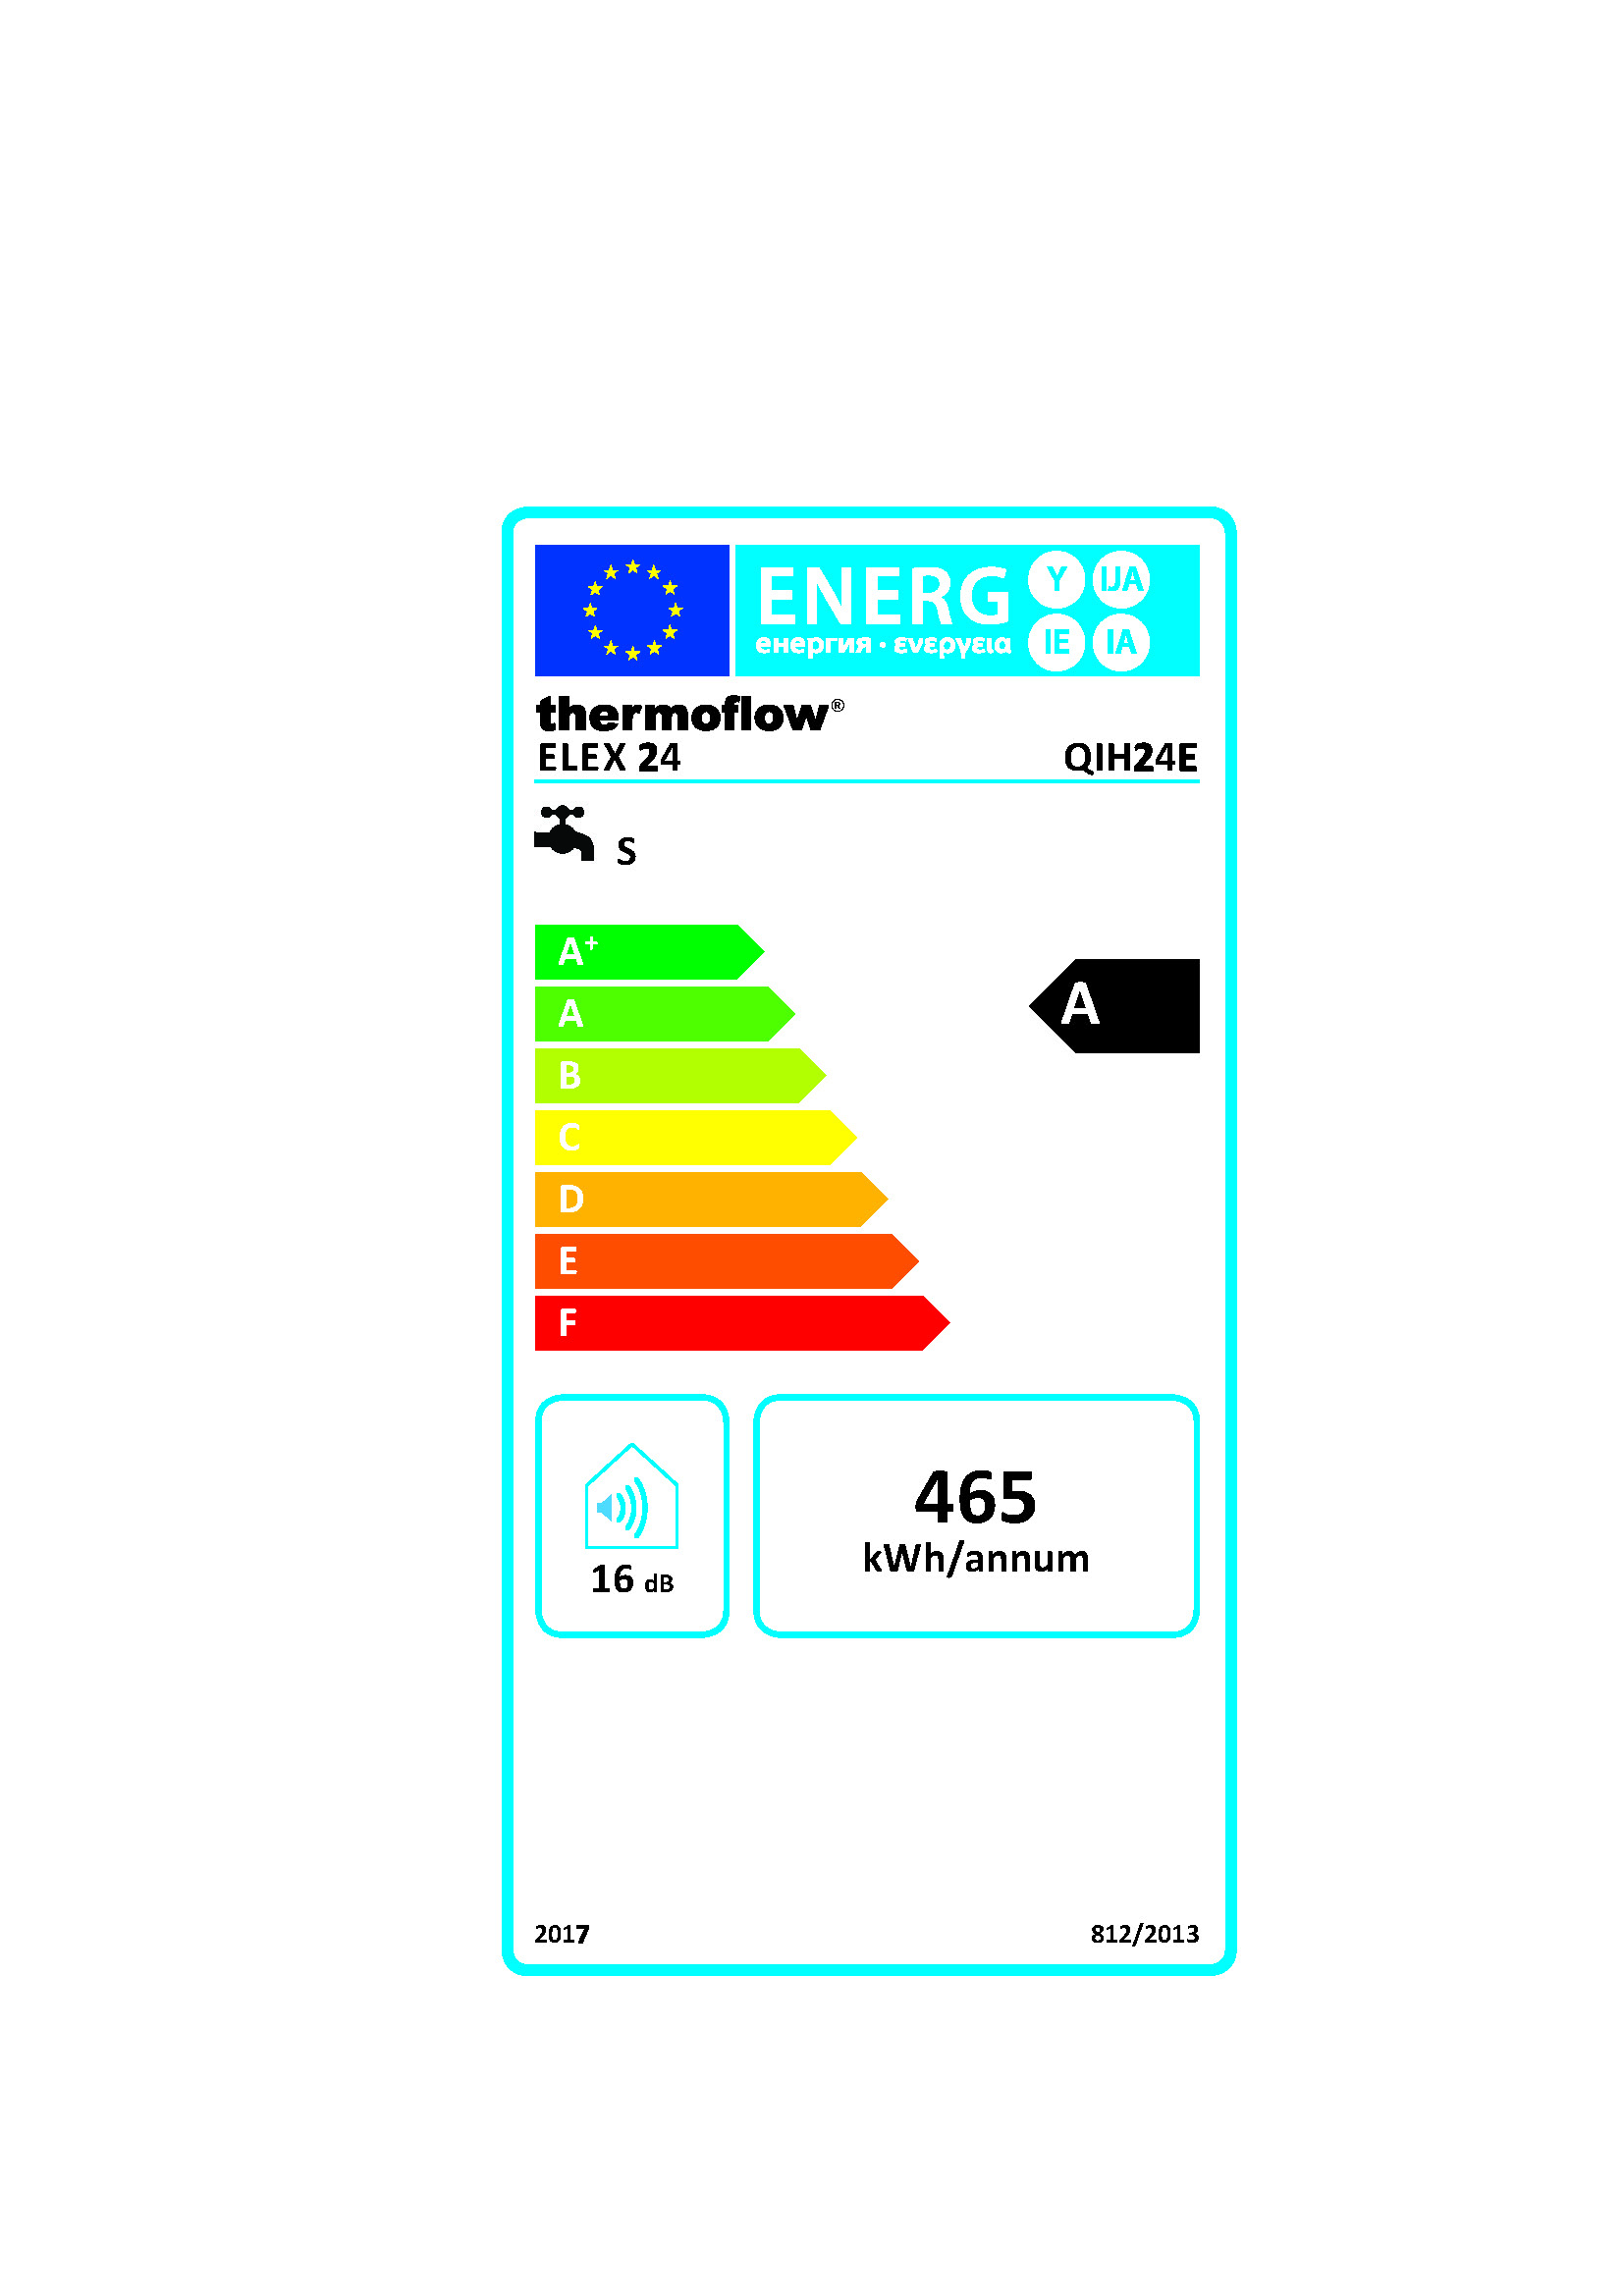 Energy_labels_Elex24